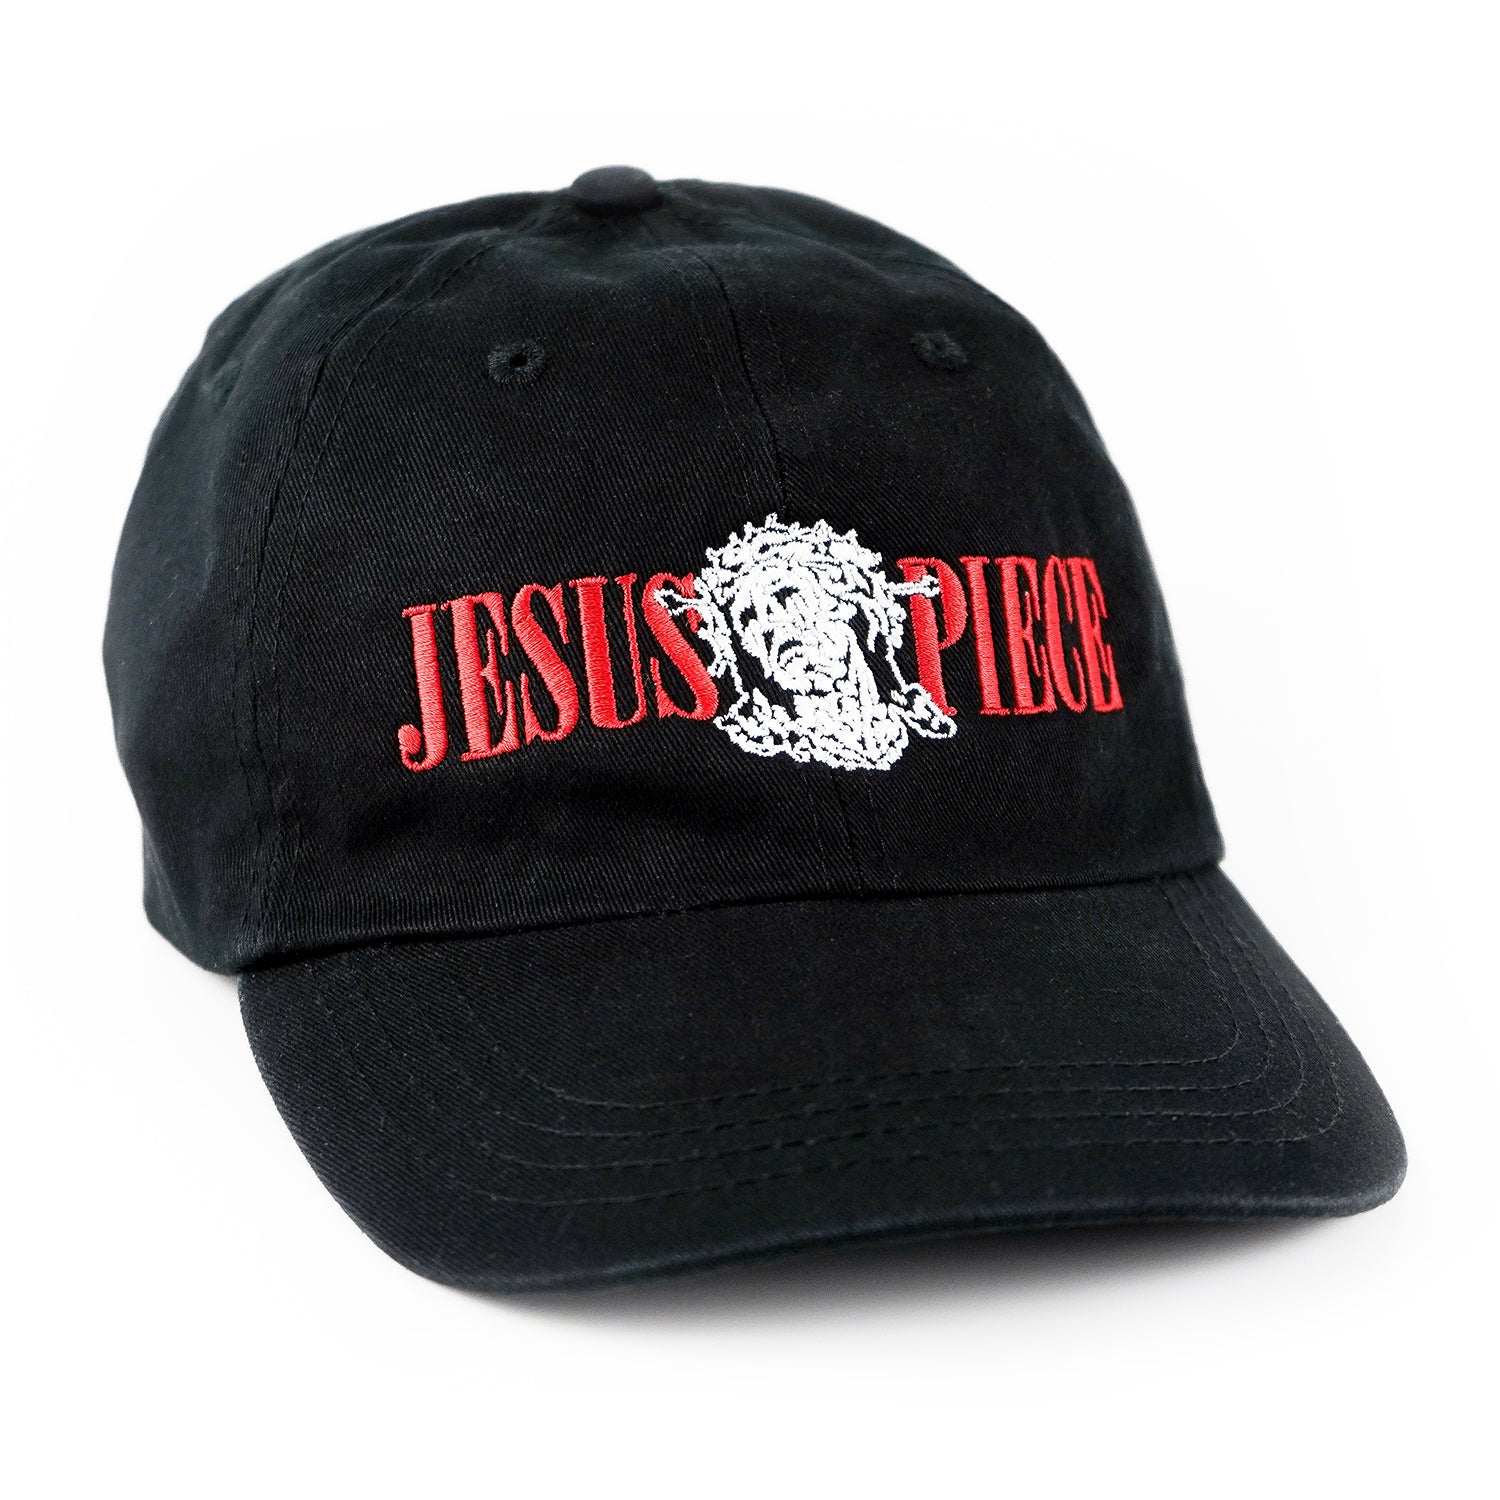 JESUS PIECE "God Head" Cap